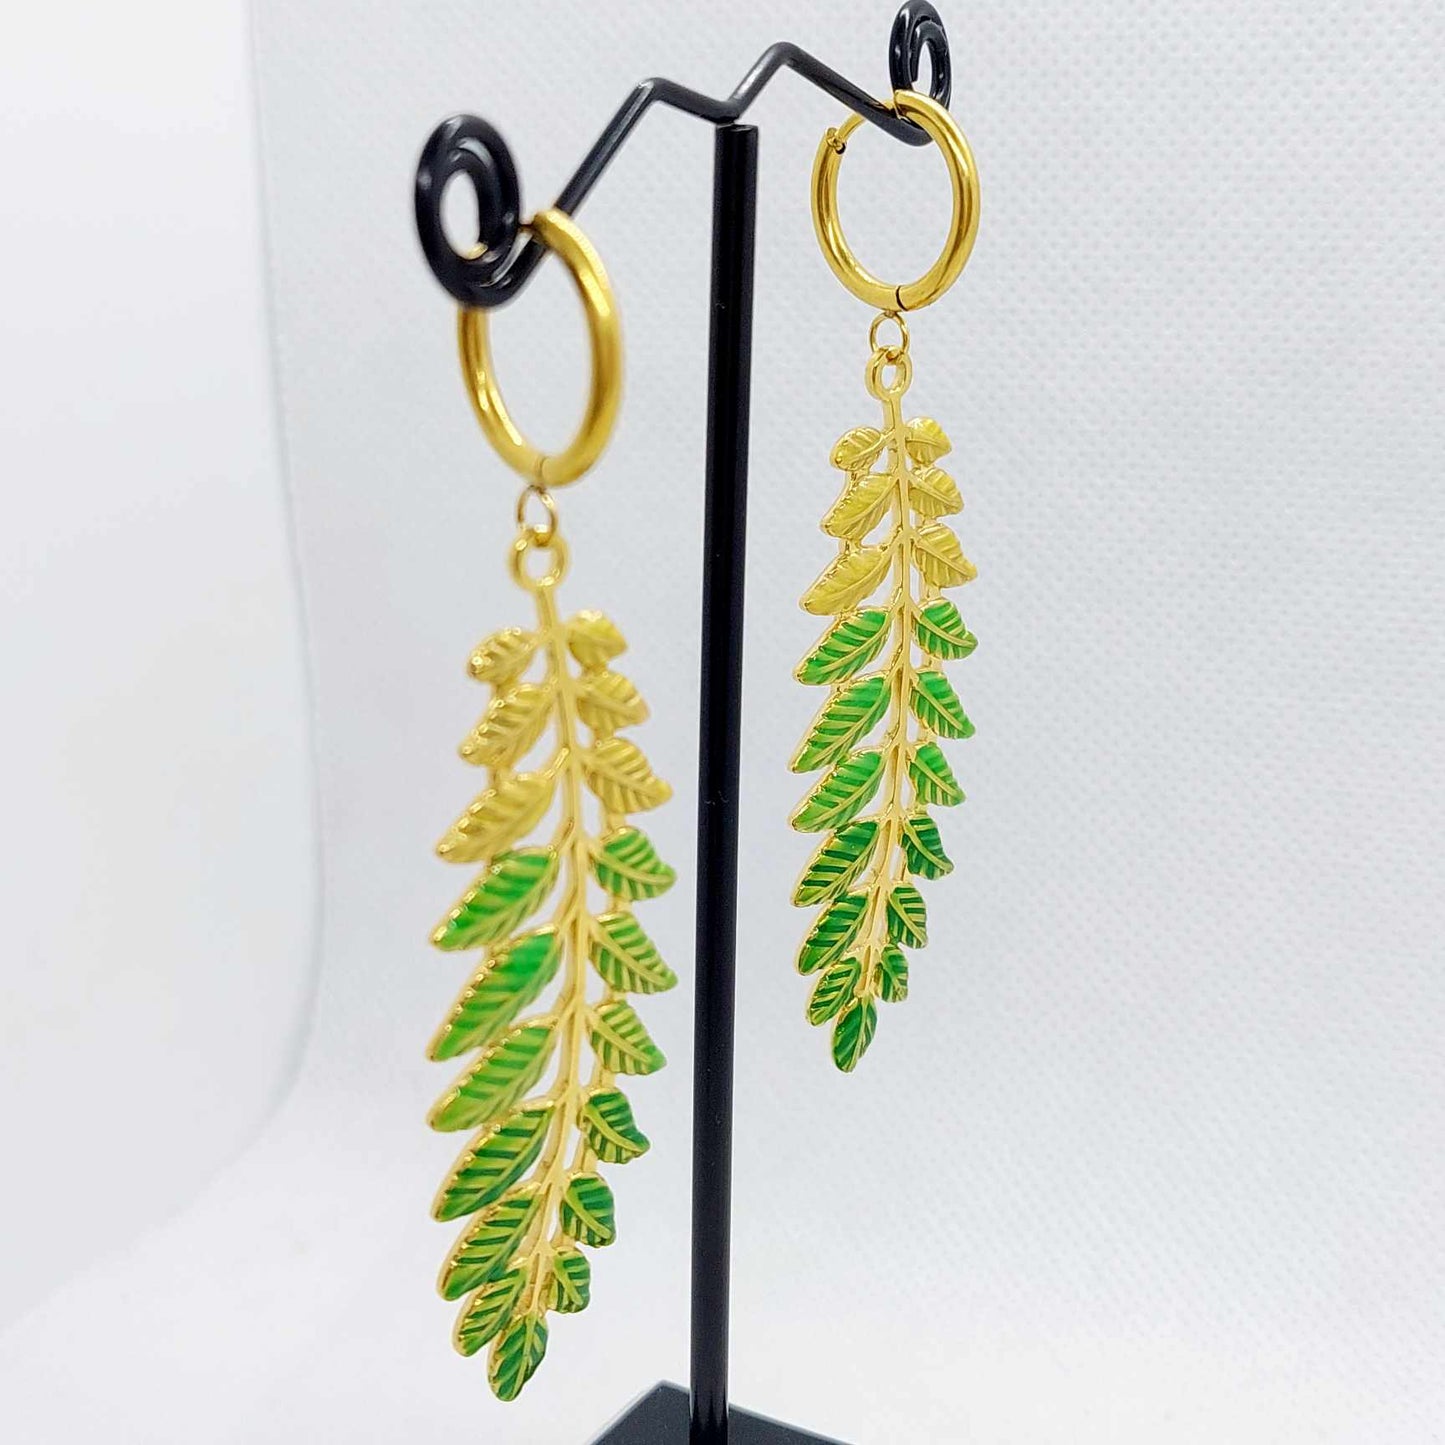 Fern Leaf on Hoop Earrings in Gold Plated Stainless Steel